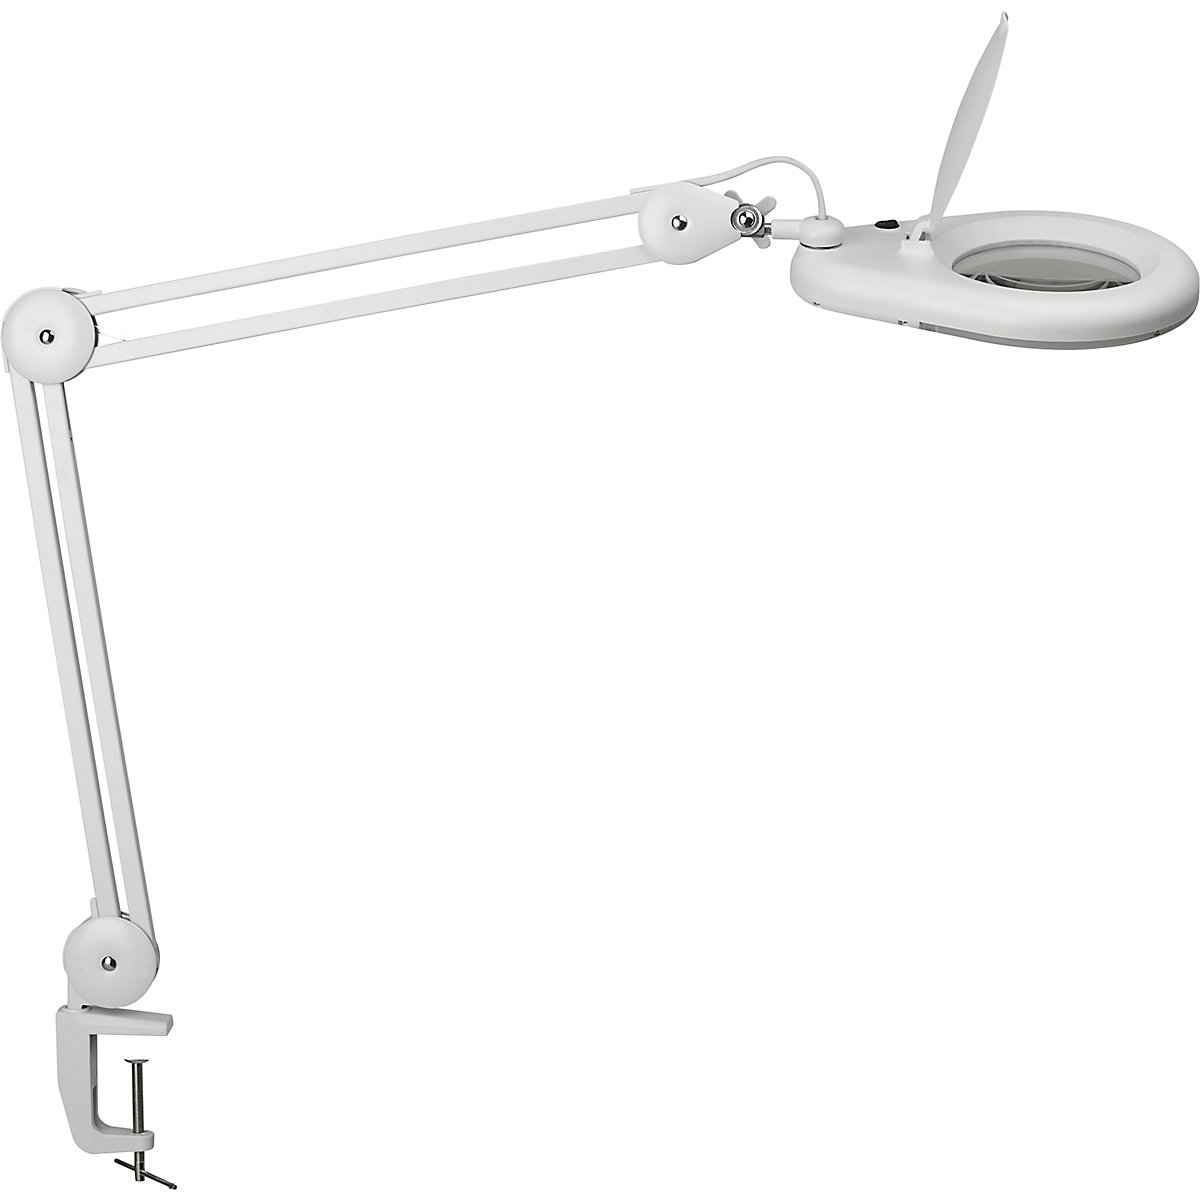 LED-loeplamp MAULviso – MAUL, armlengte 410 mm, met tafelklem, wit-5